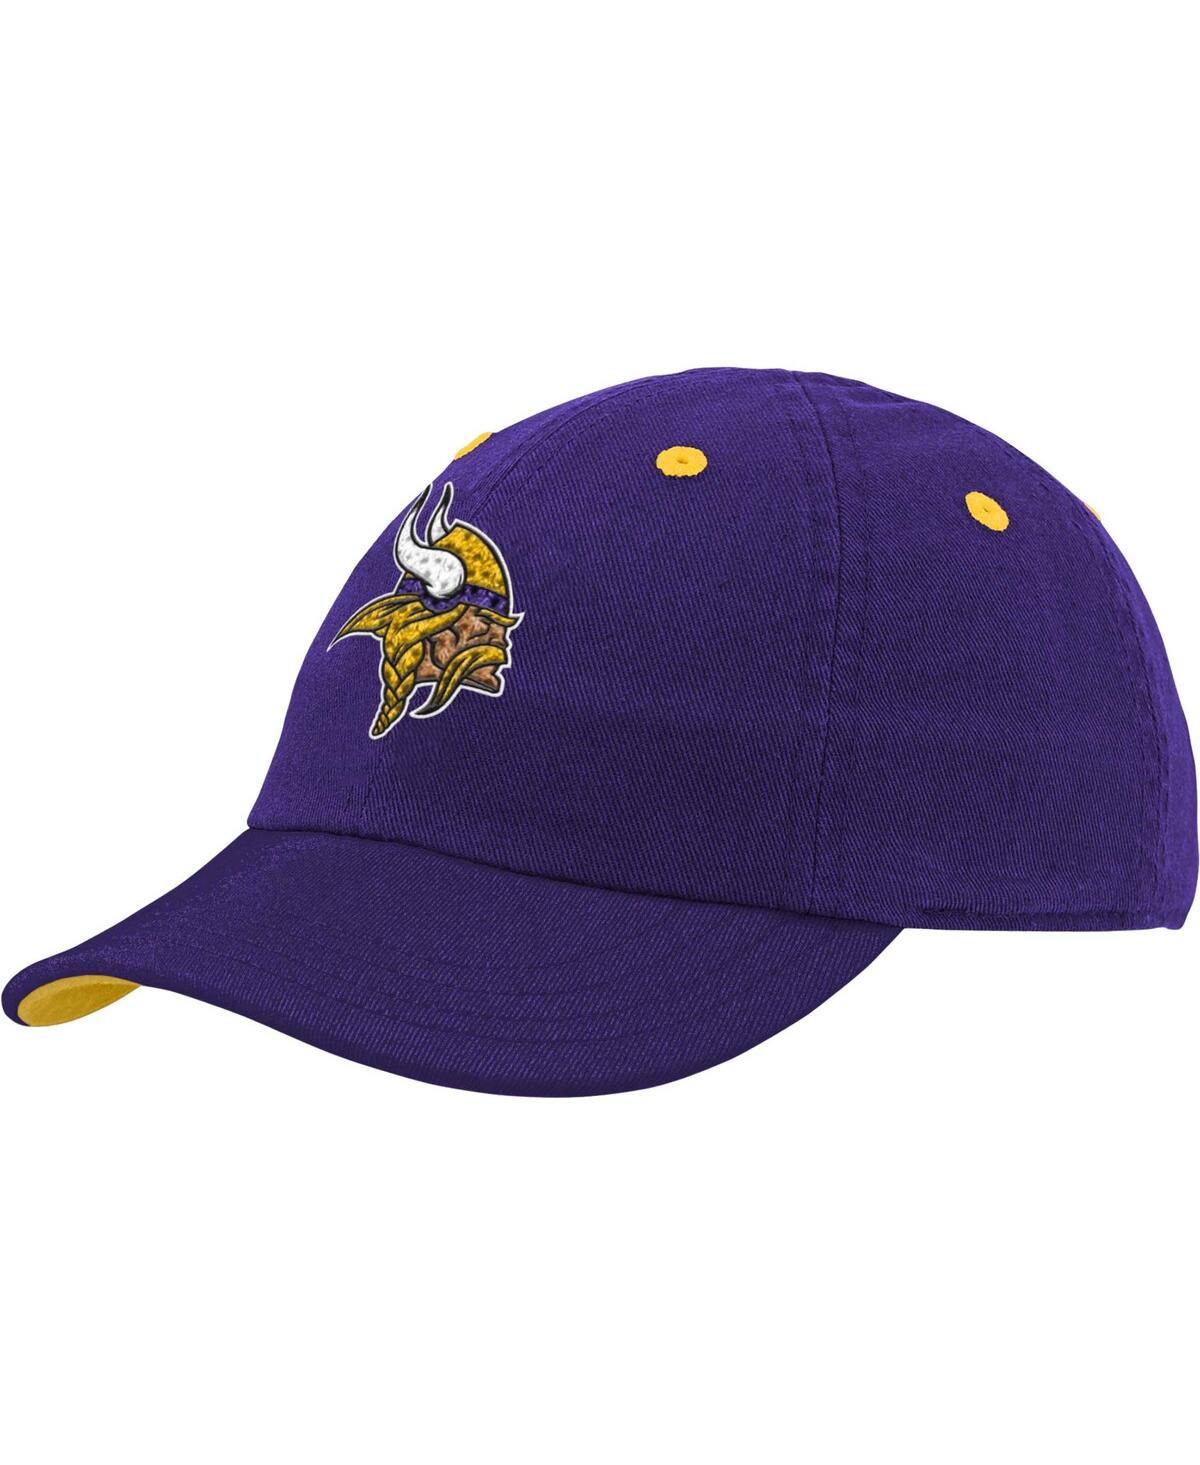 Outerstuff Babies' Boys And Girls Infant Purple Minnesota Vikings Team Slouch Flex Hat